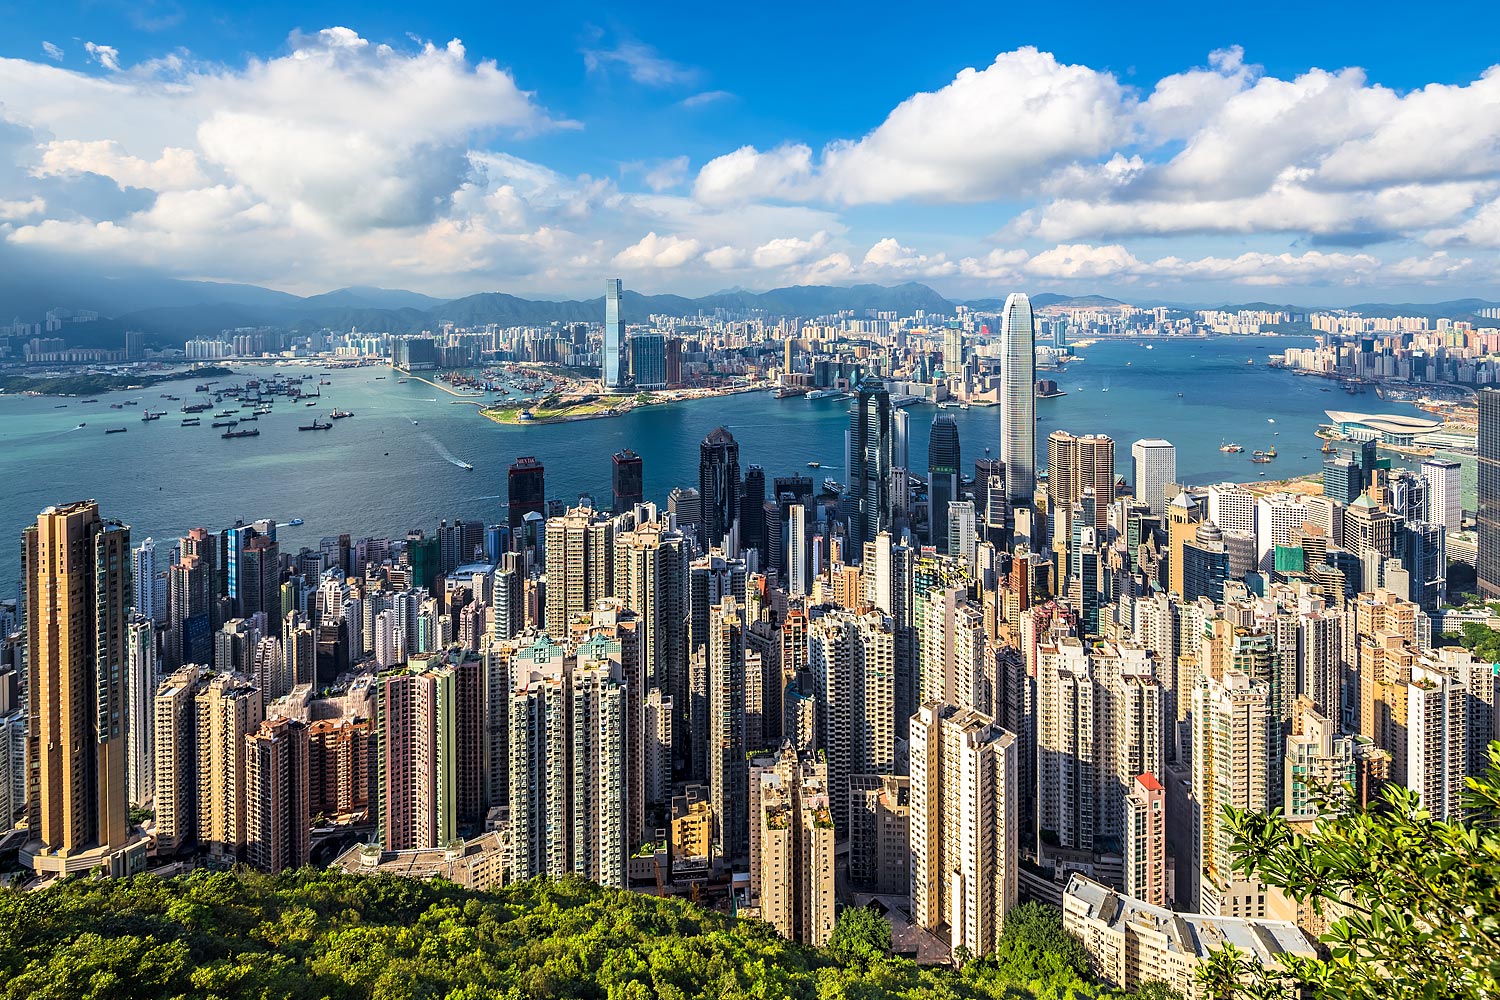 Panorama of Hong Kong, as seen from Victoria Peak